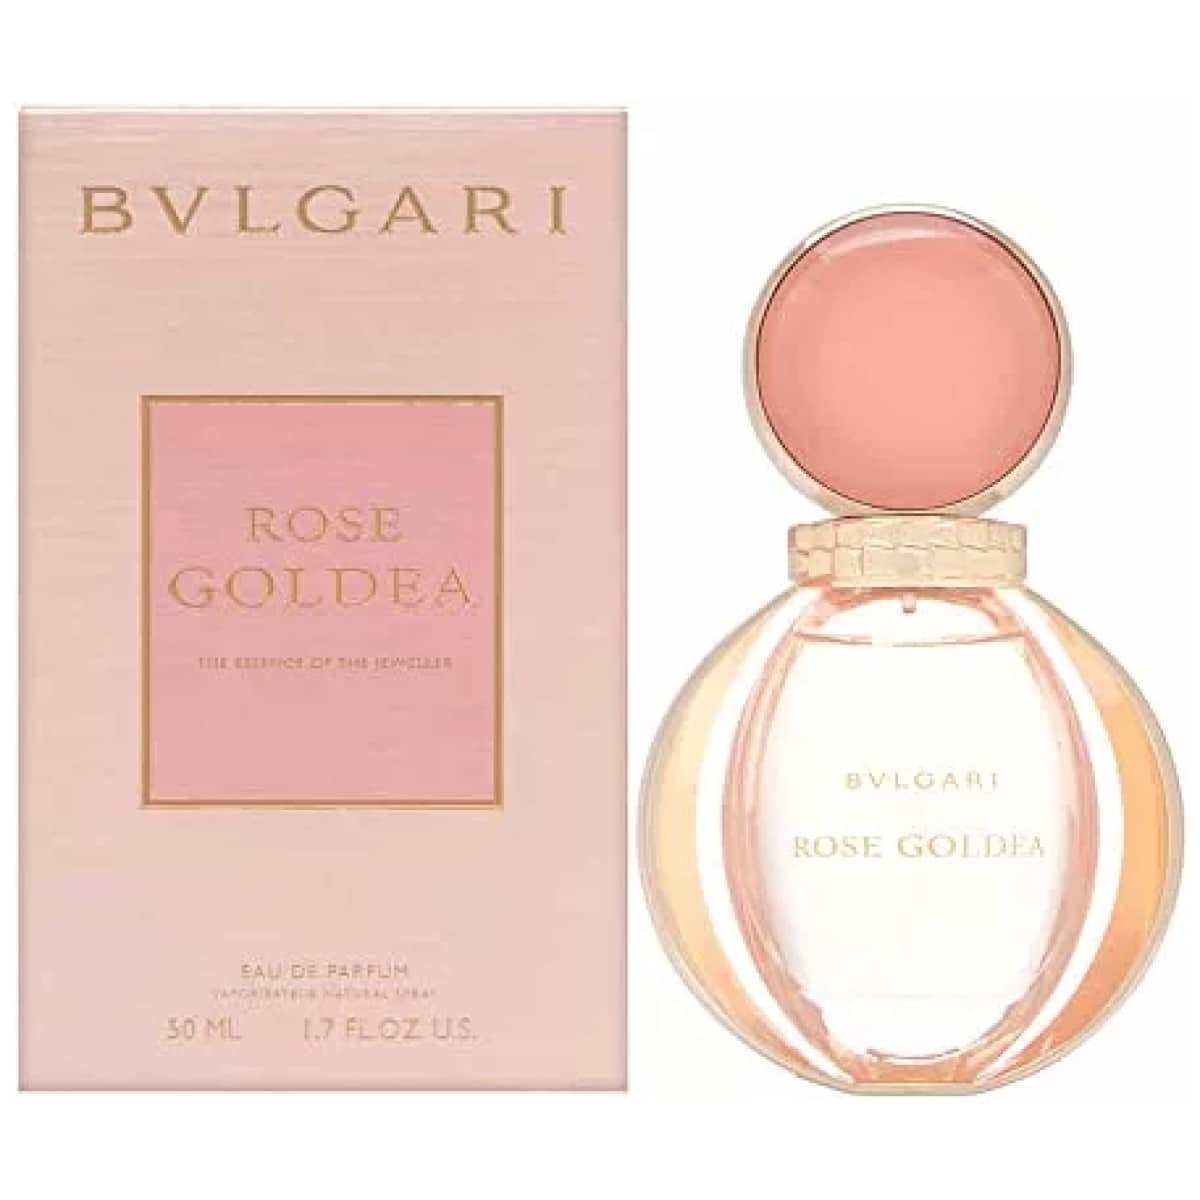 Bvlgari Rose Goldea EDP Perfume For Women 50ml